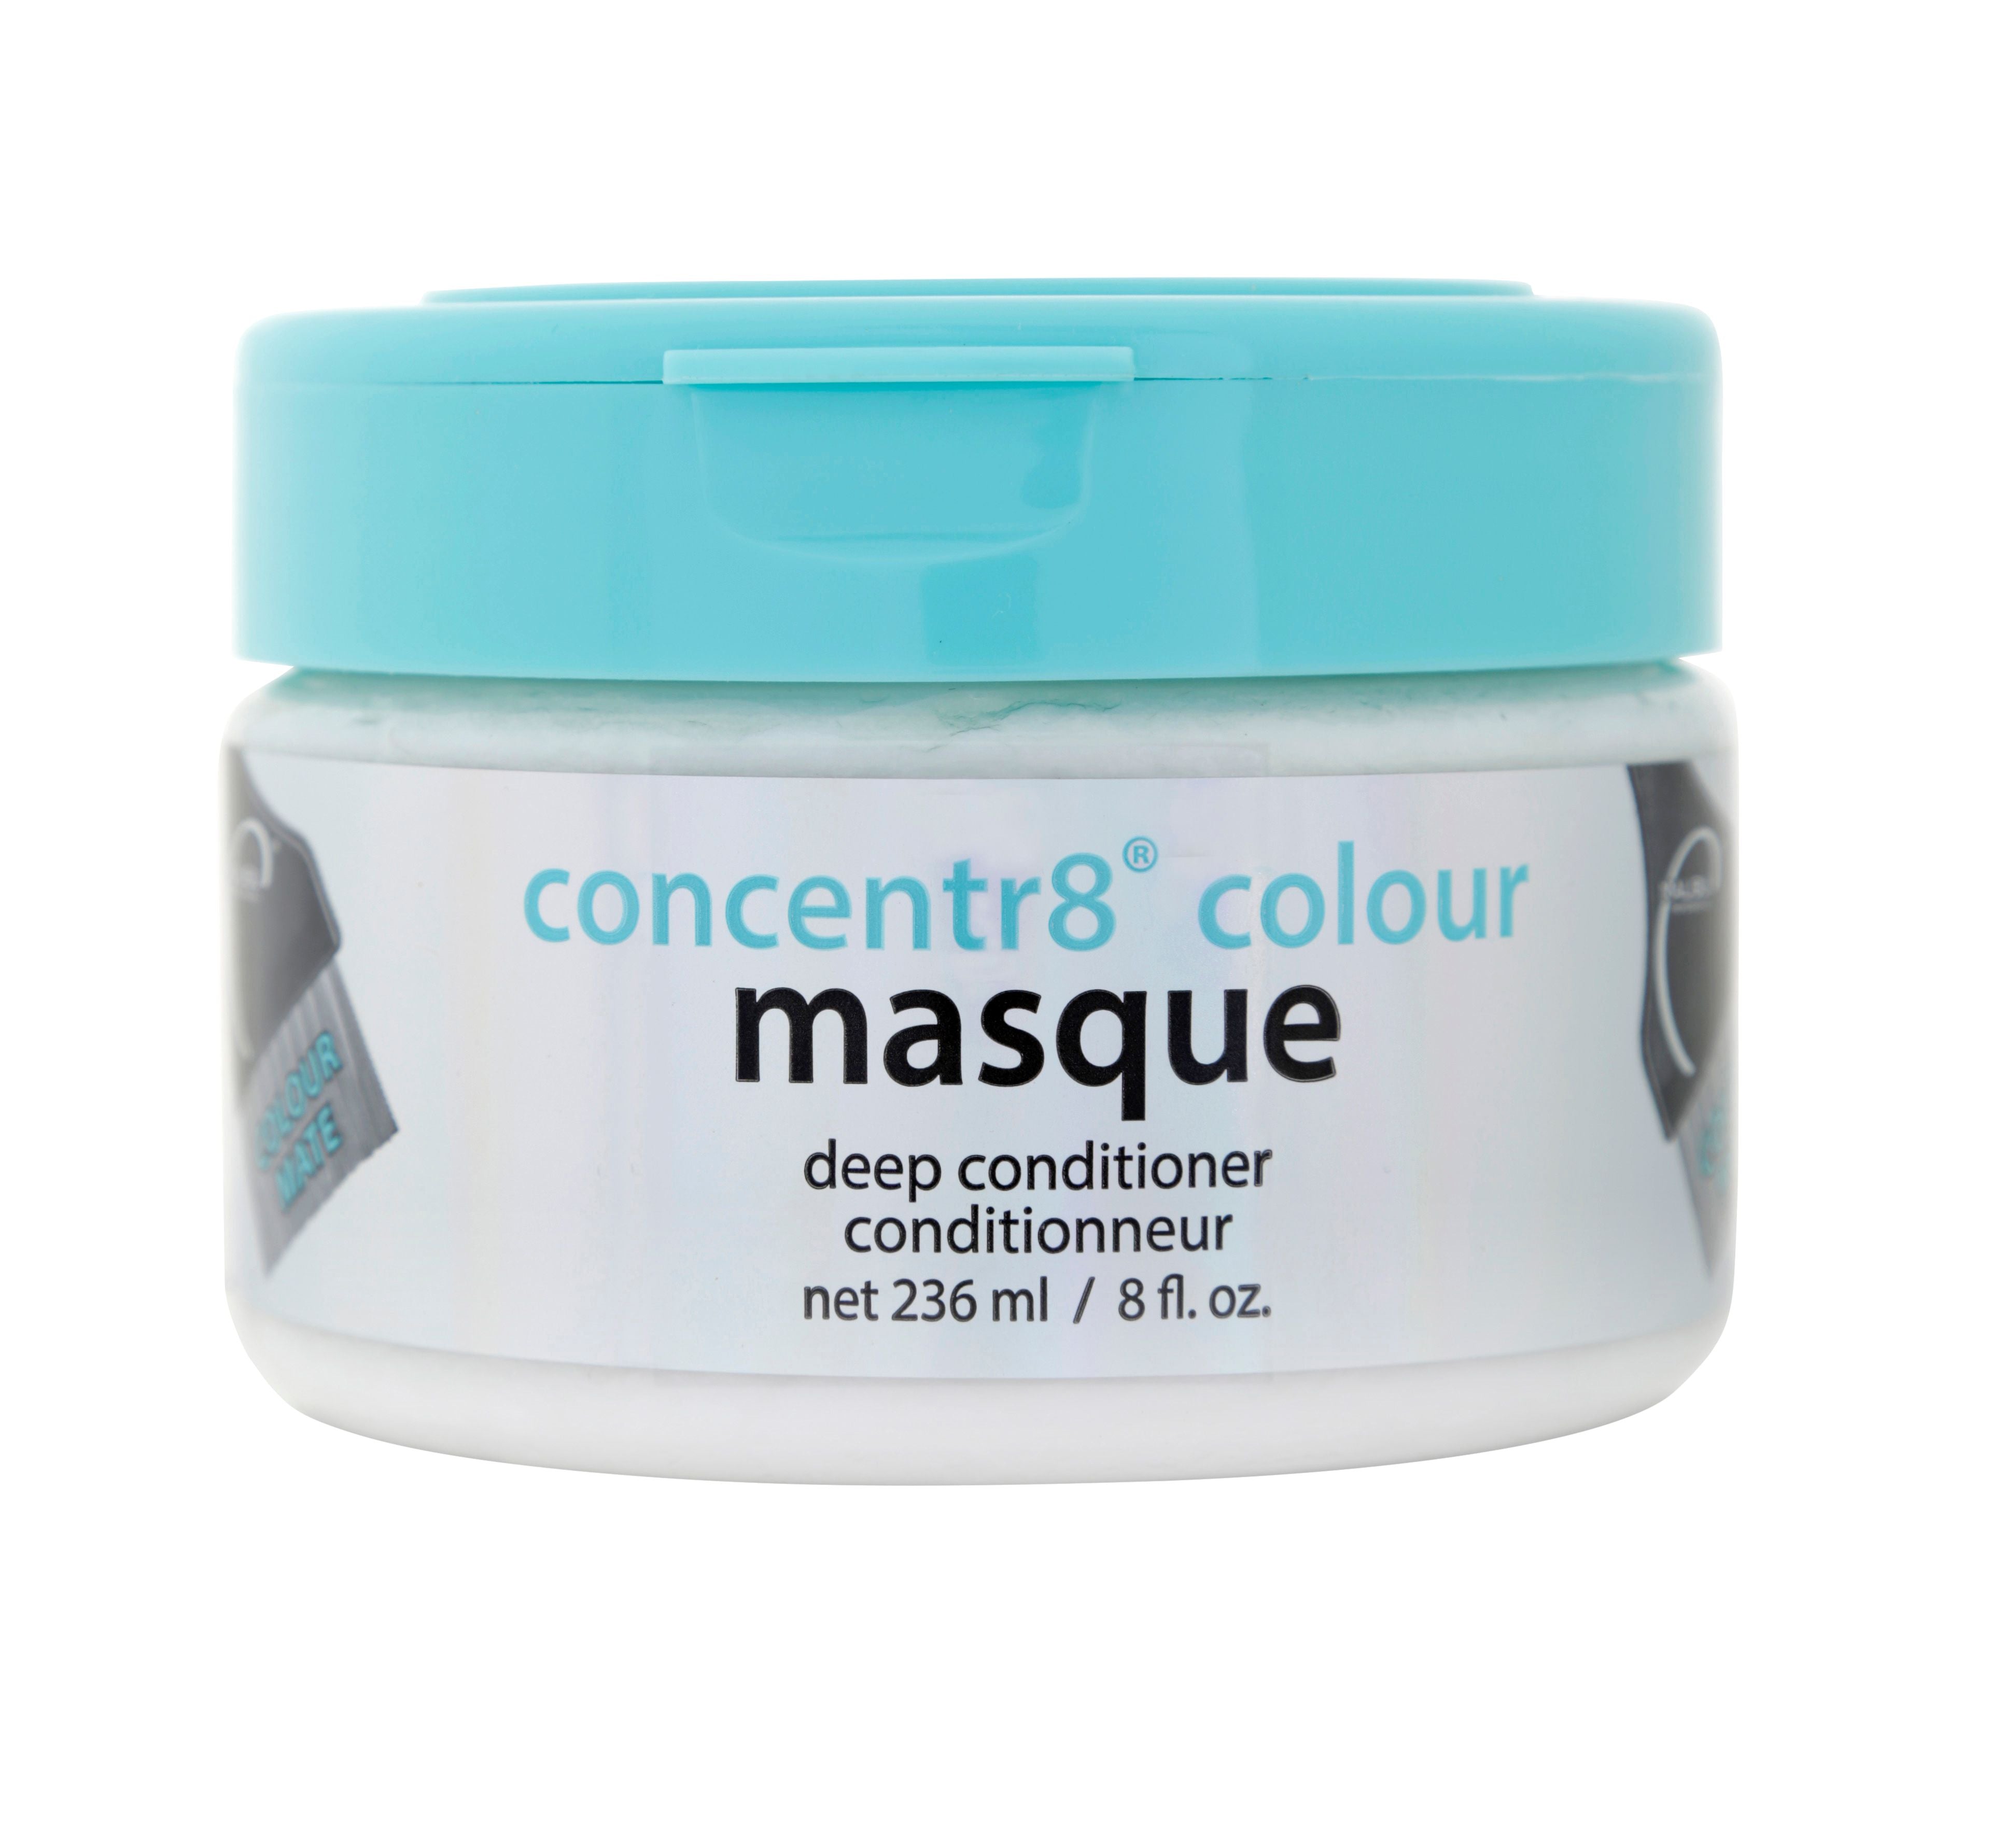 Malibu C Concentr8 Masque - 236ml